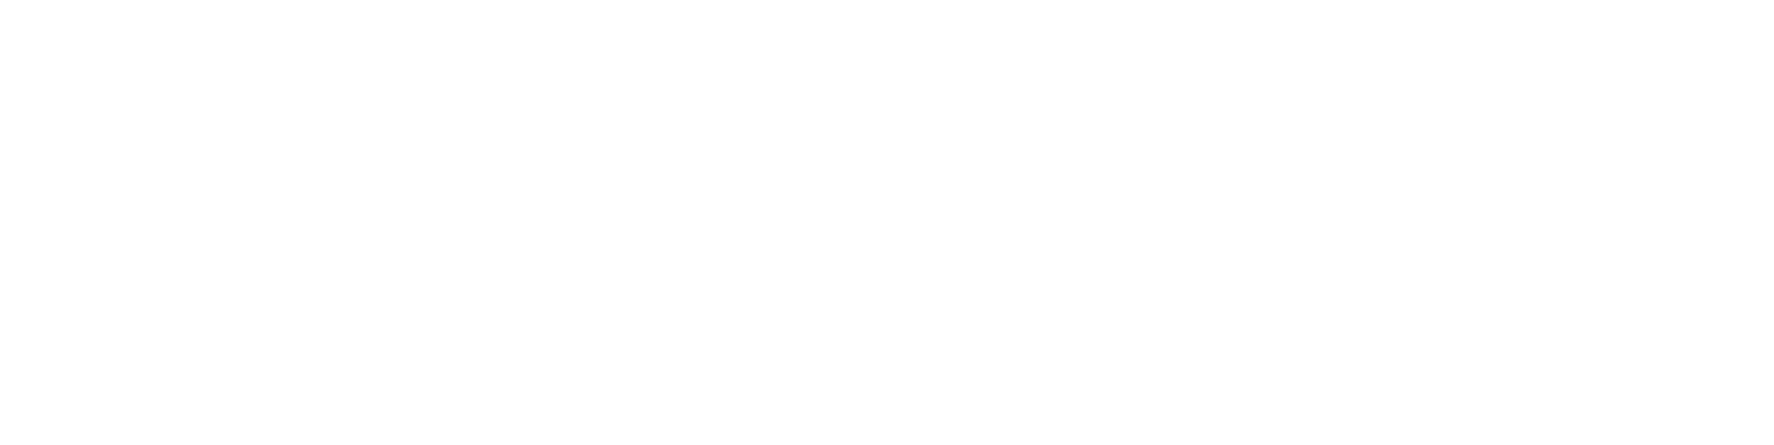 Nano-X Imaging logo grand pour les fonds sombres (PNG transparent)